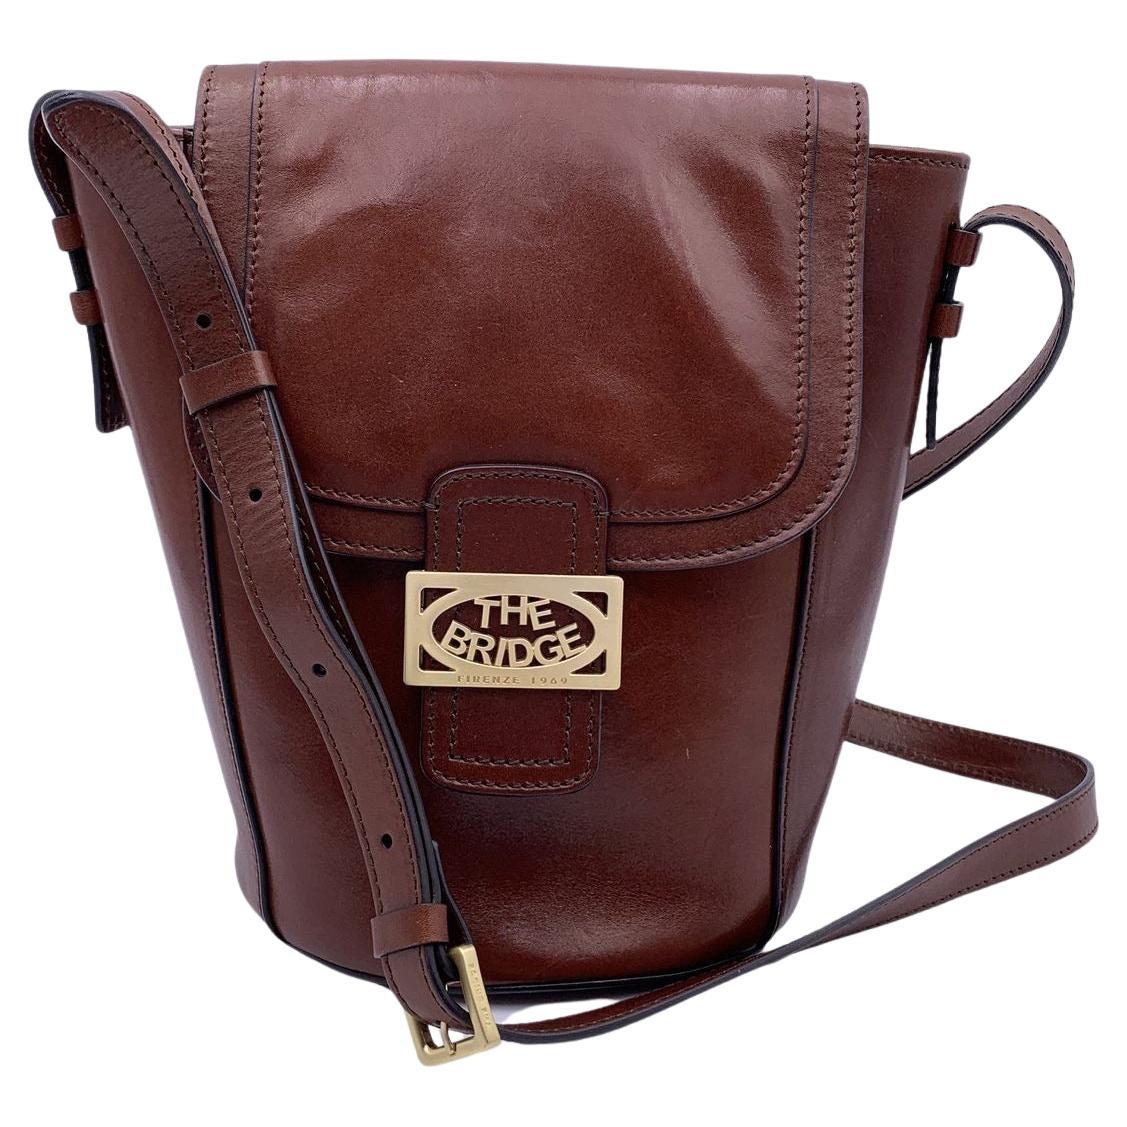 The Bridge Brown Leather Shoulder Bag Flap Bucket